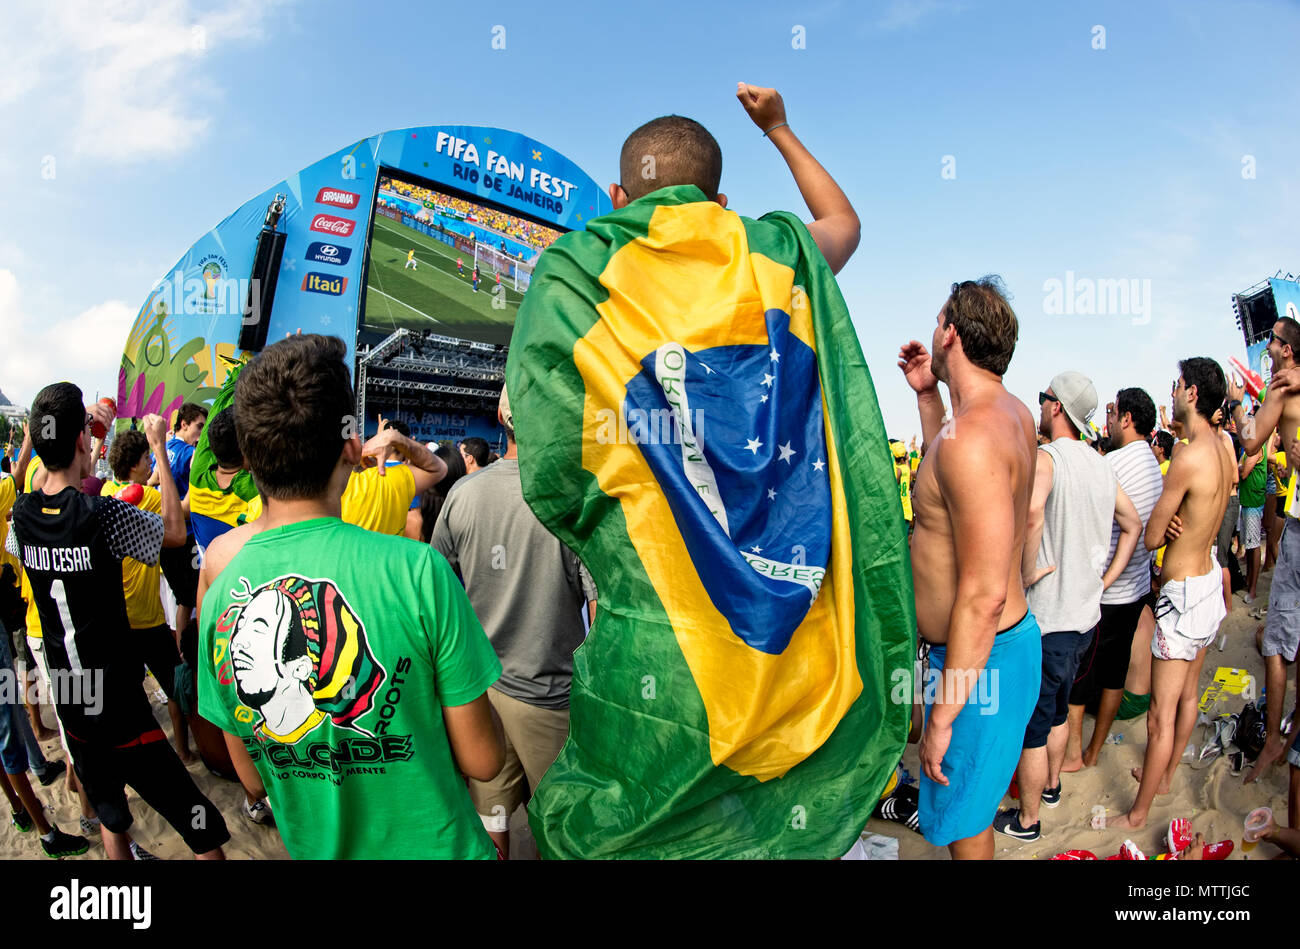 World Cup, Rio de Janeiro, Brazil - June 28, 2014: Brazilian soccer fans support their soccer team at the Fifa Fan Fest area on Copacabana beach Stock Photo